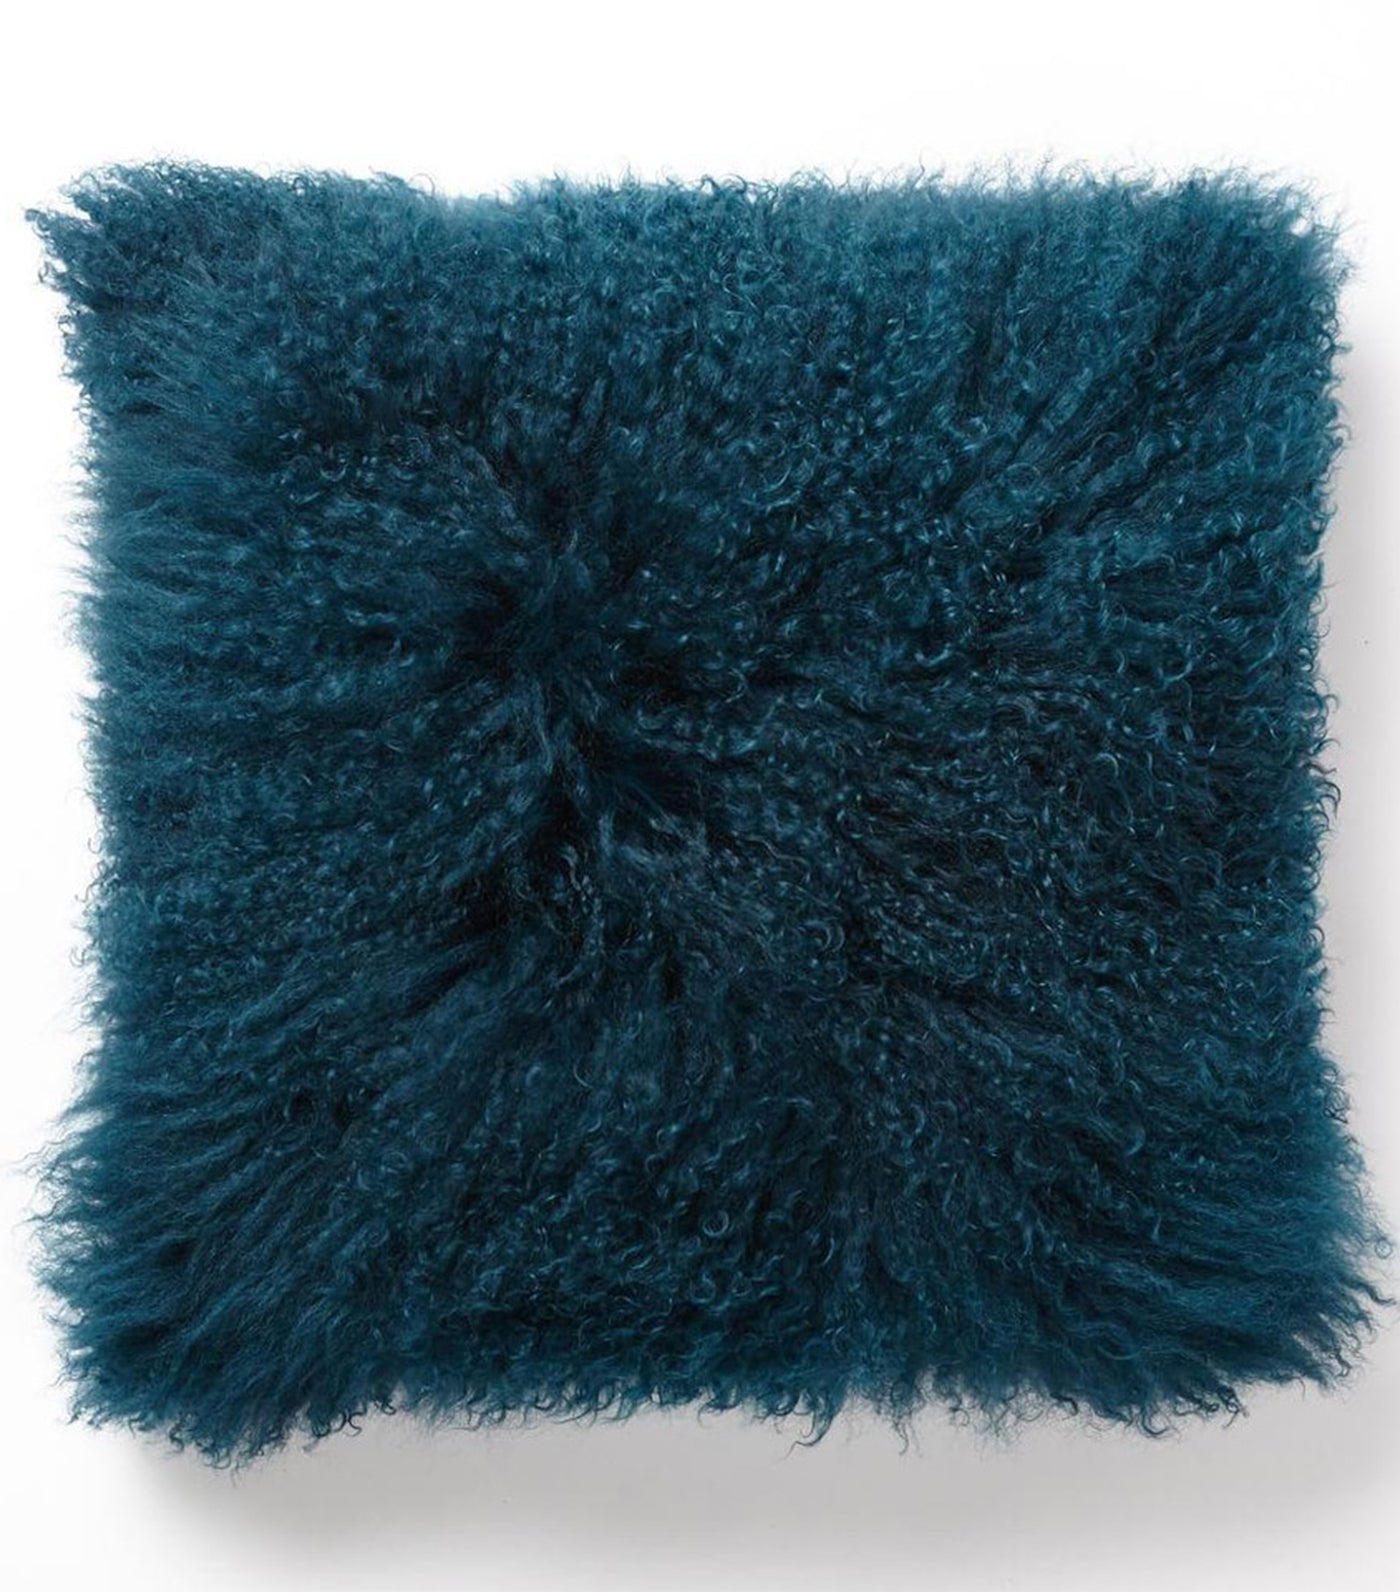 west elm blue teal mongolian lamb pillow cover 16x16